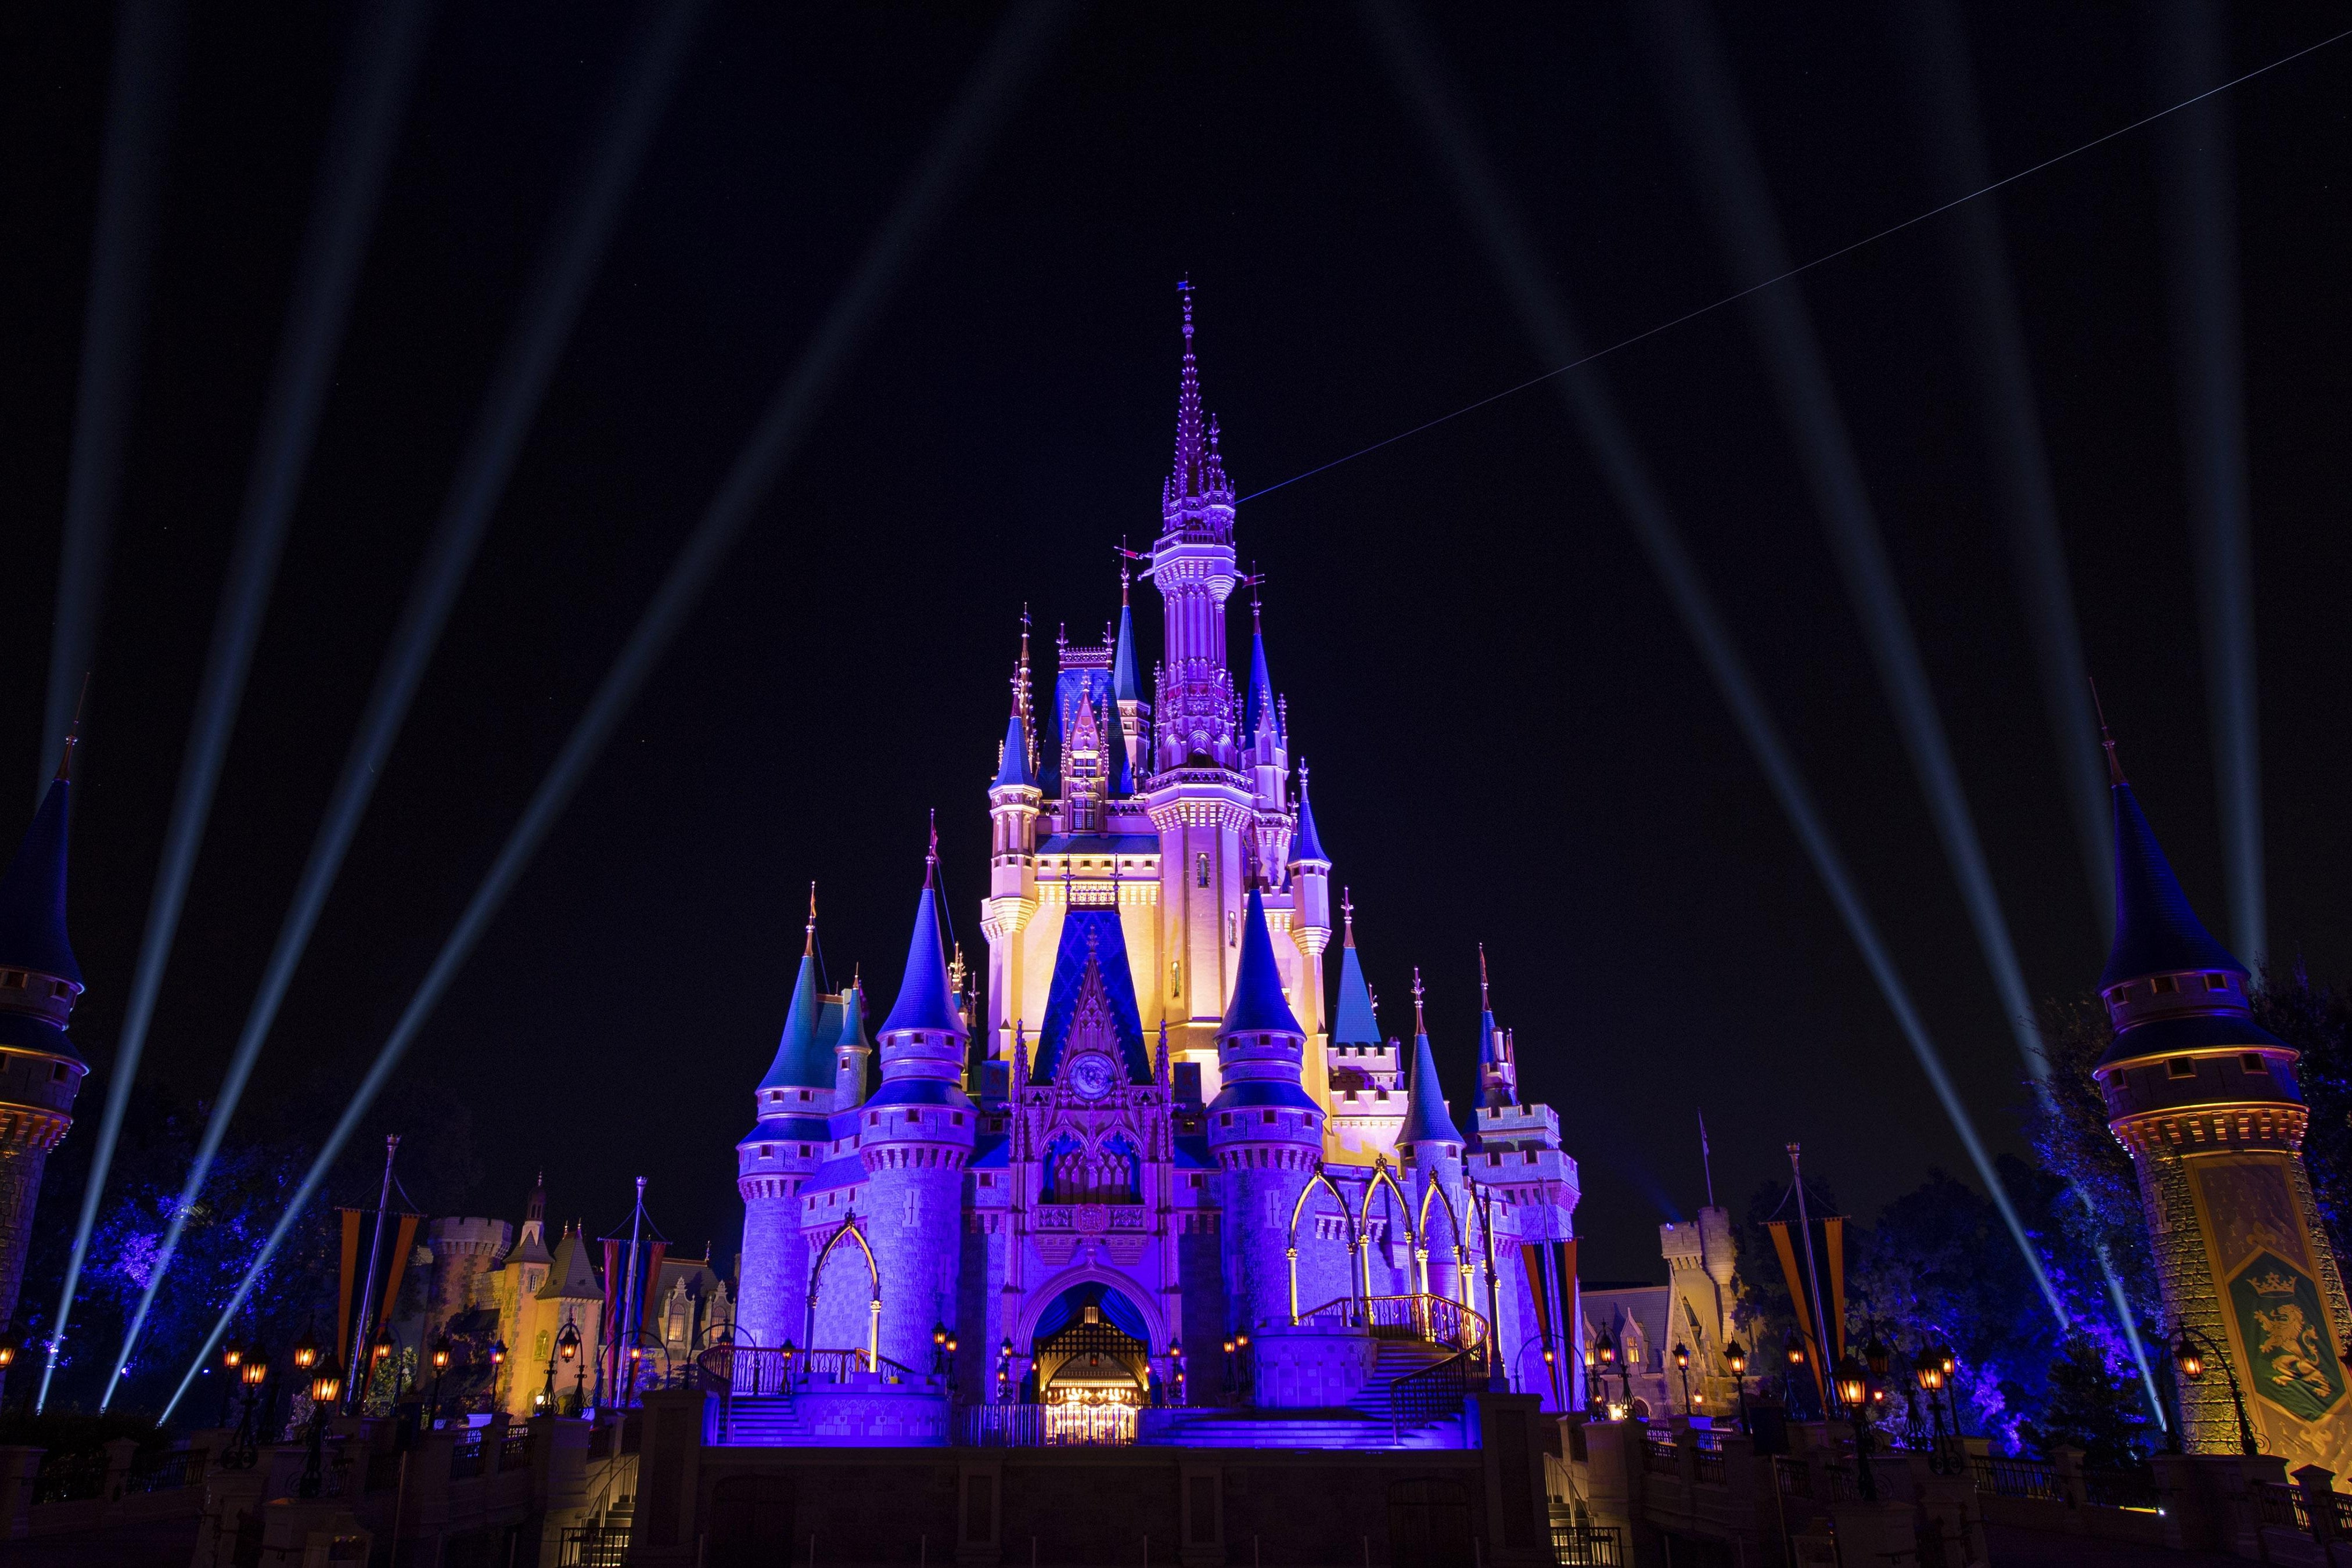 Cinderella's castle inside Disney World, lit purple.